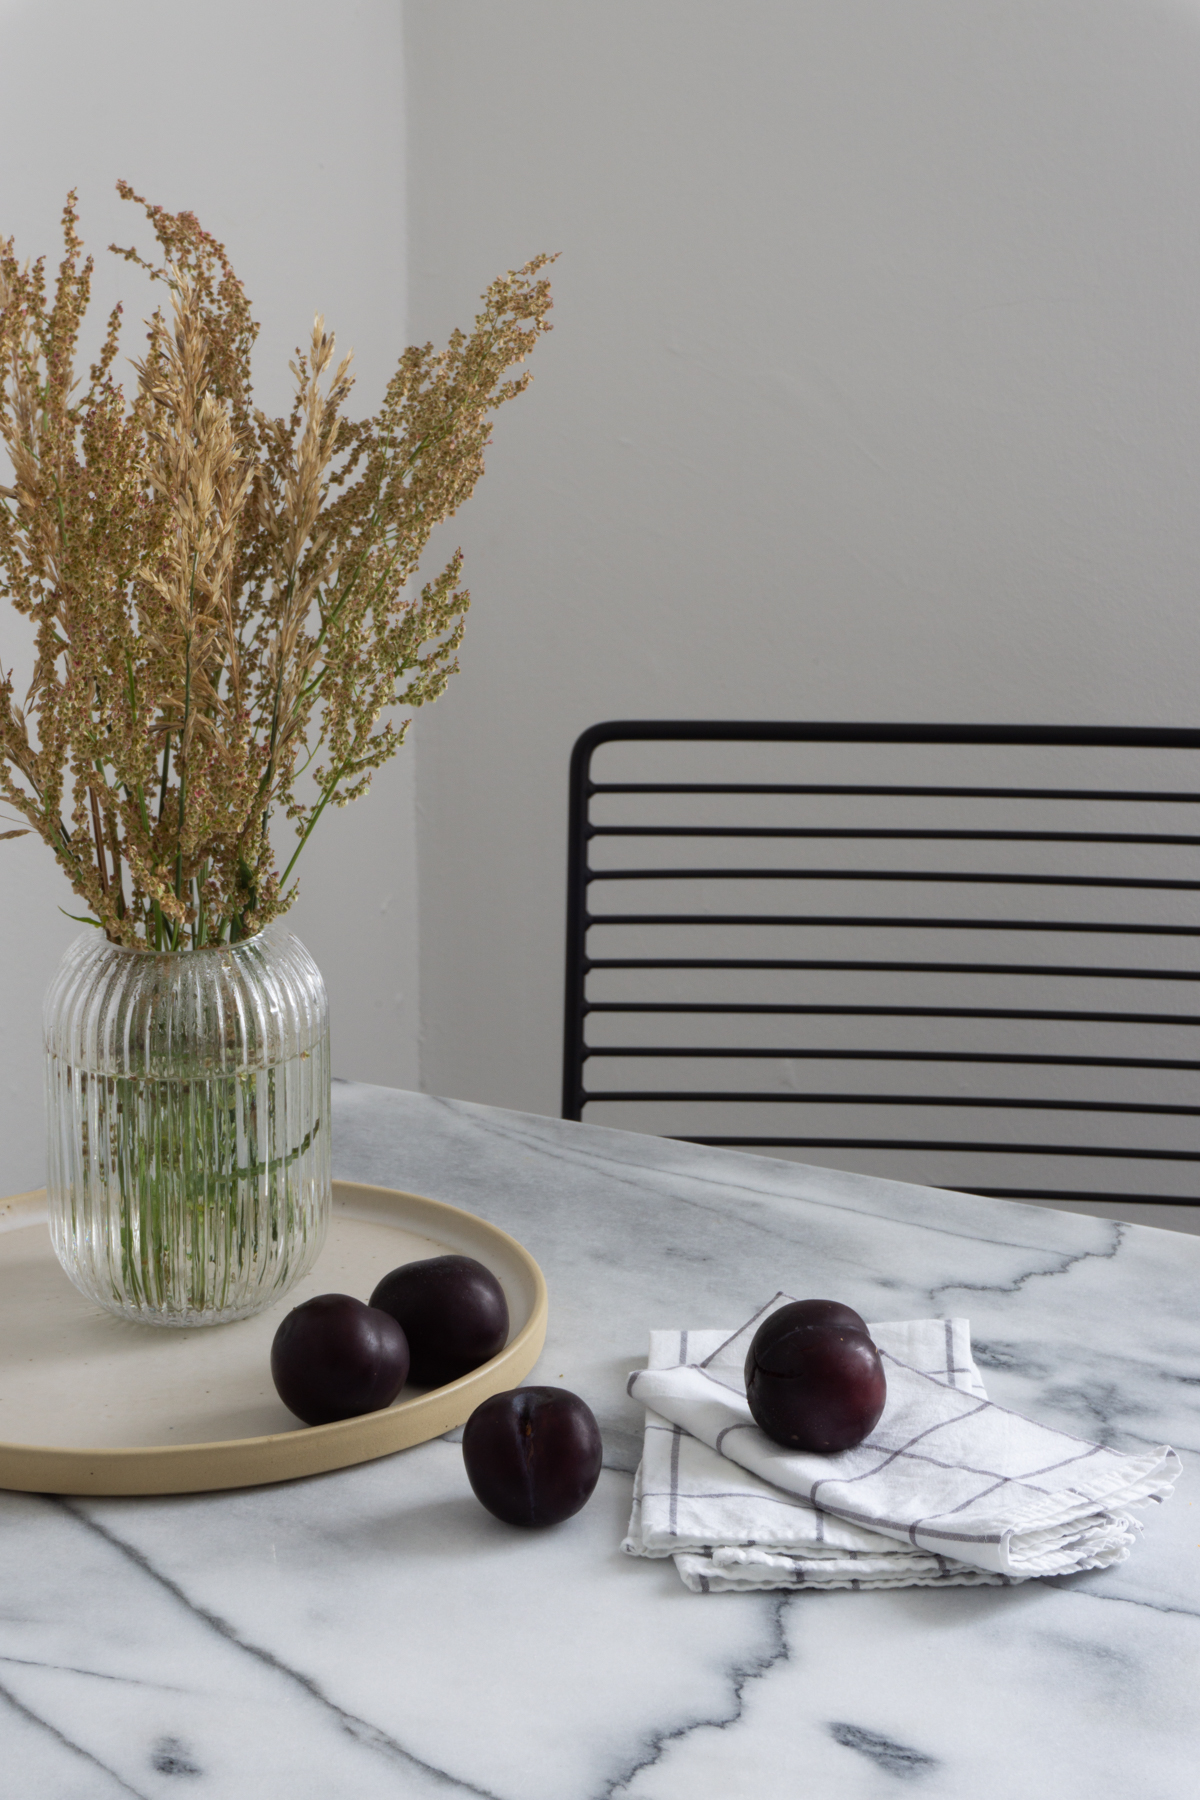 White and Beige Danish Inspired Kitchen | Alva Concept Ceramics, Plums, Marble Kitchen Table, Wheat Arrangement - RG Daily Blog, Interior Design